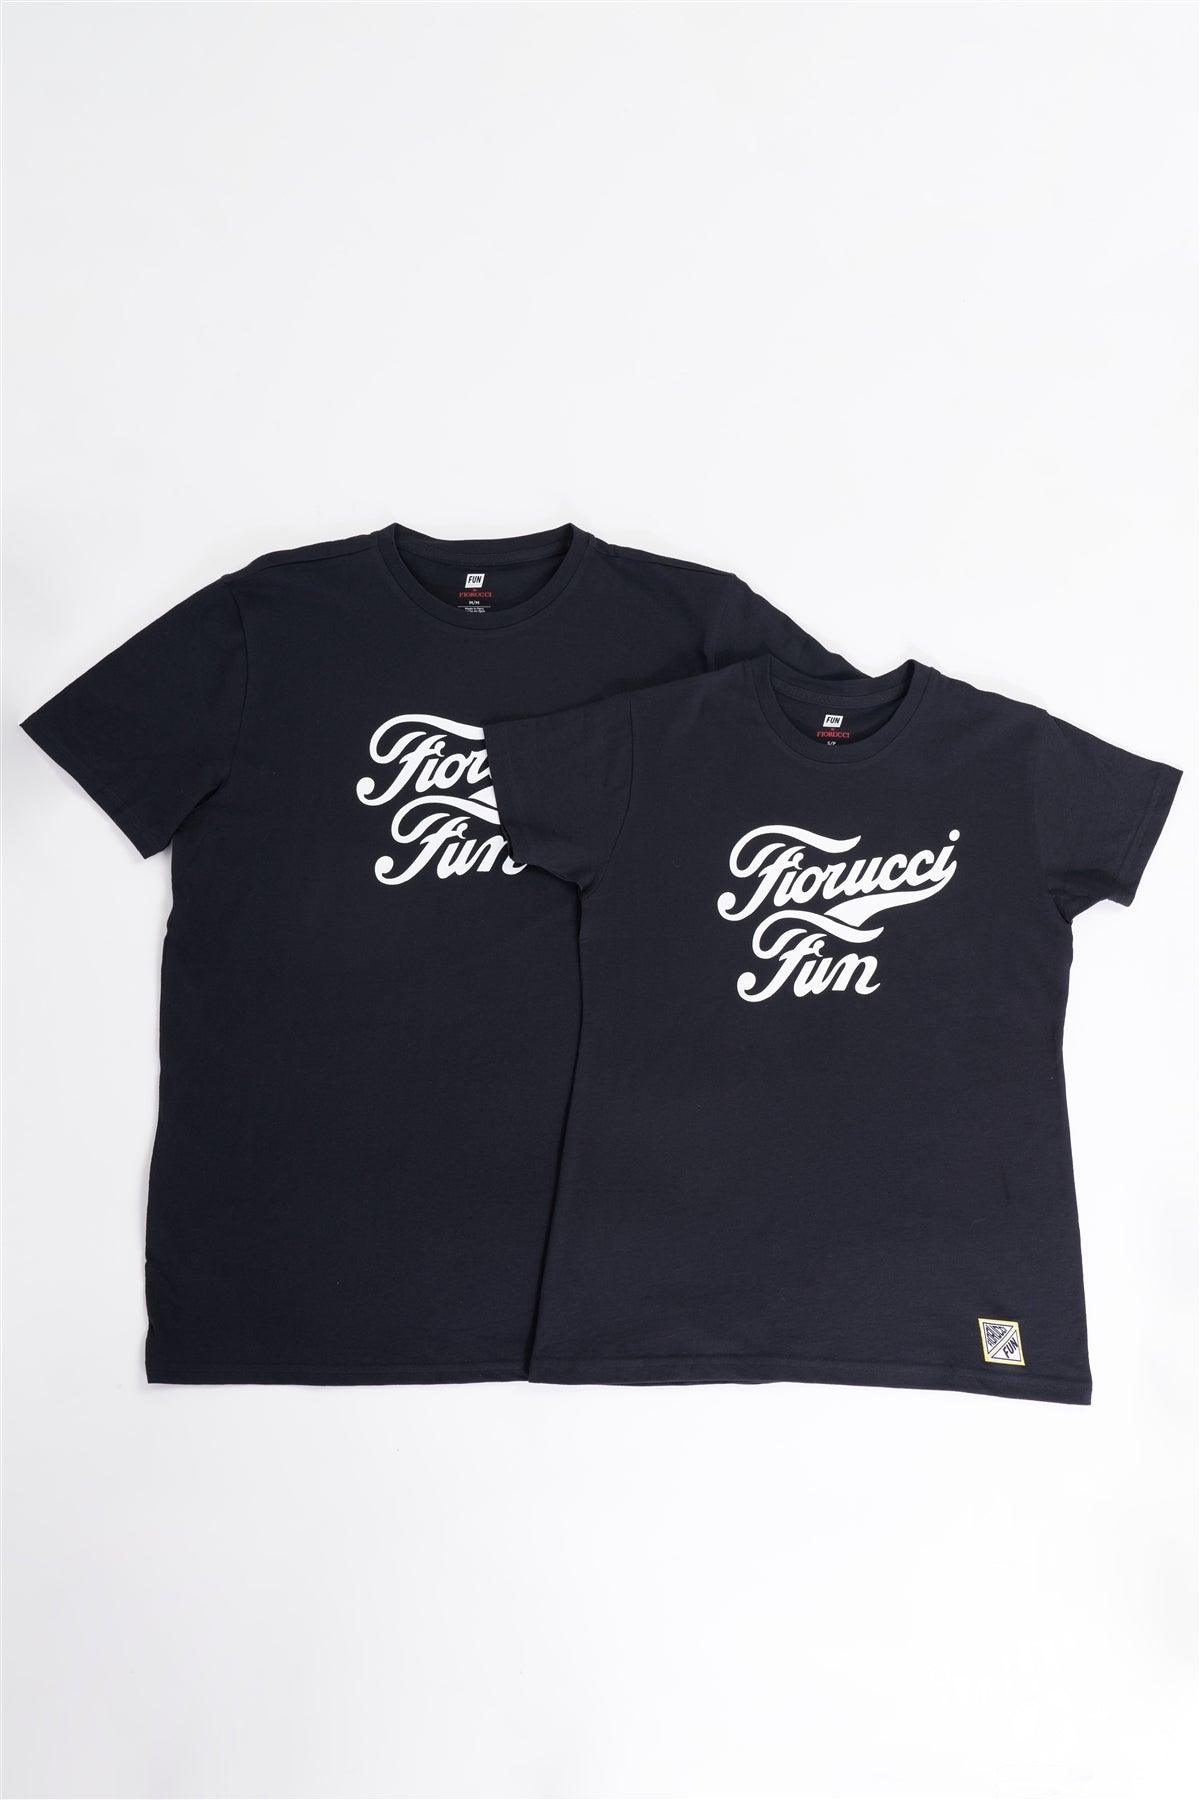 Fiorucci Fun Men's Black & White Printed Logo T-Shirt For Him /1-2-2